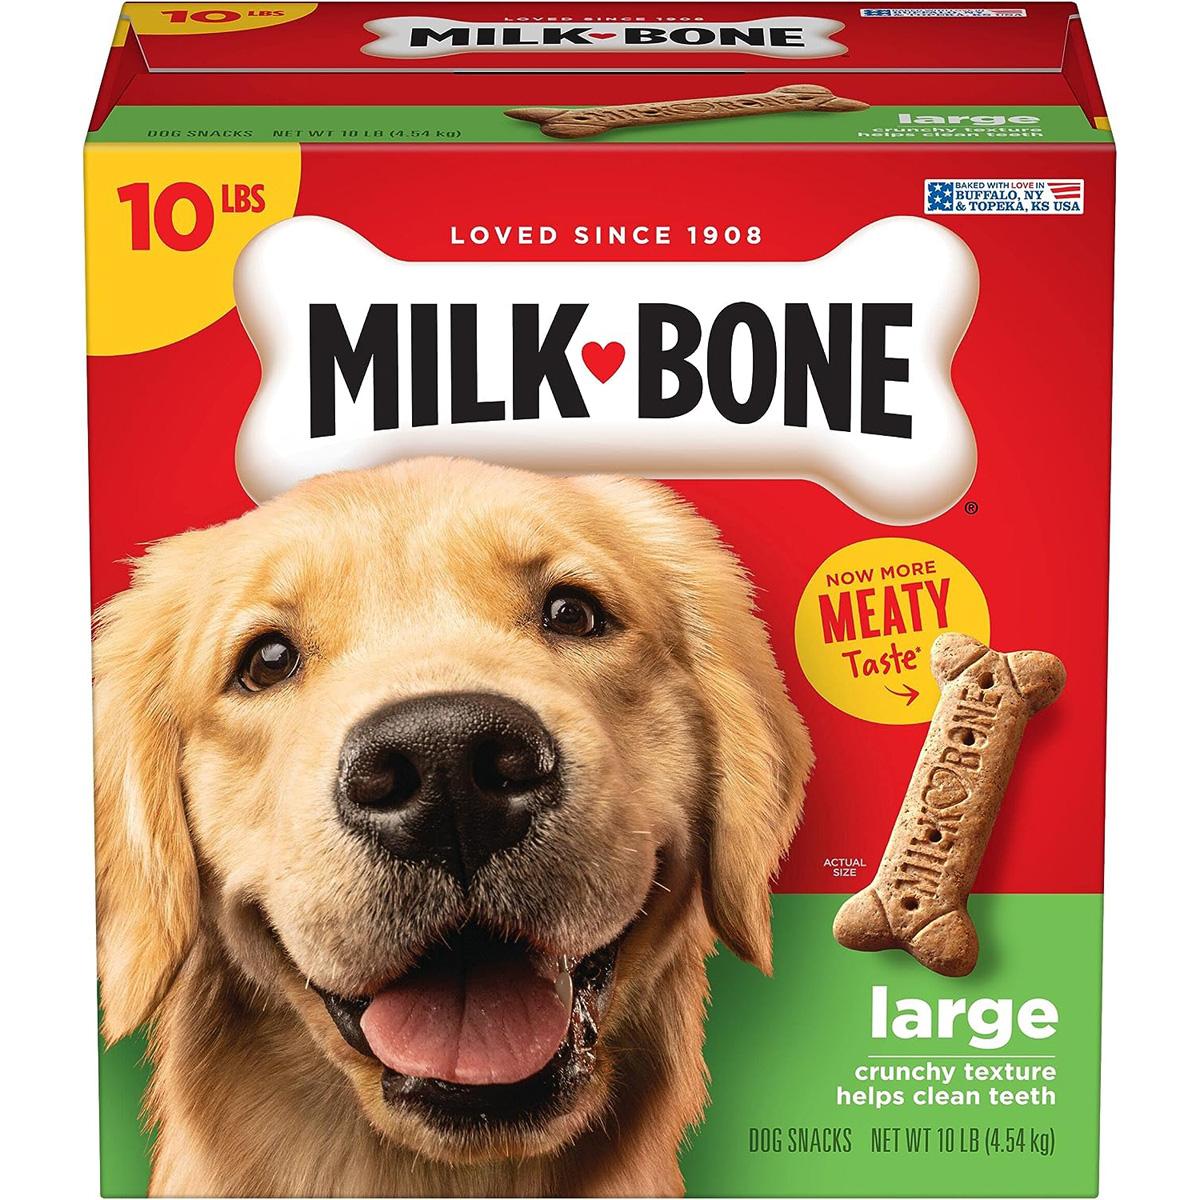 Milk-Bone Original Dog Treats Biscuits 10Lbs for $8.24 Shipped